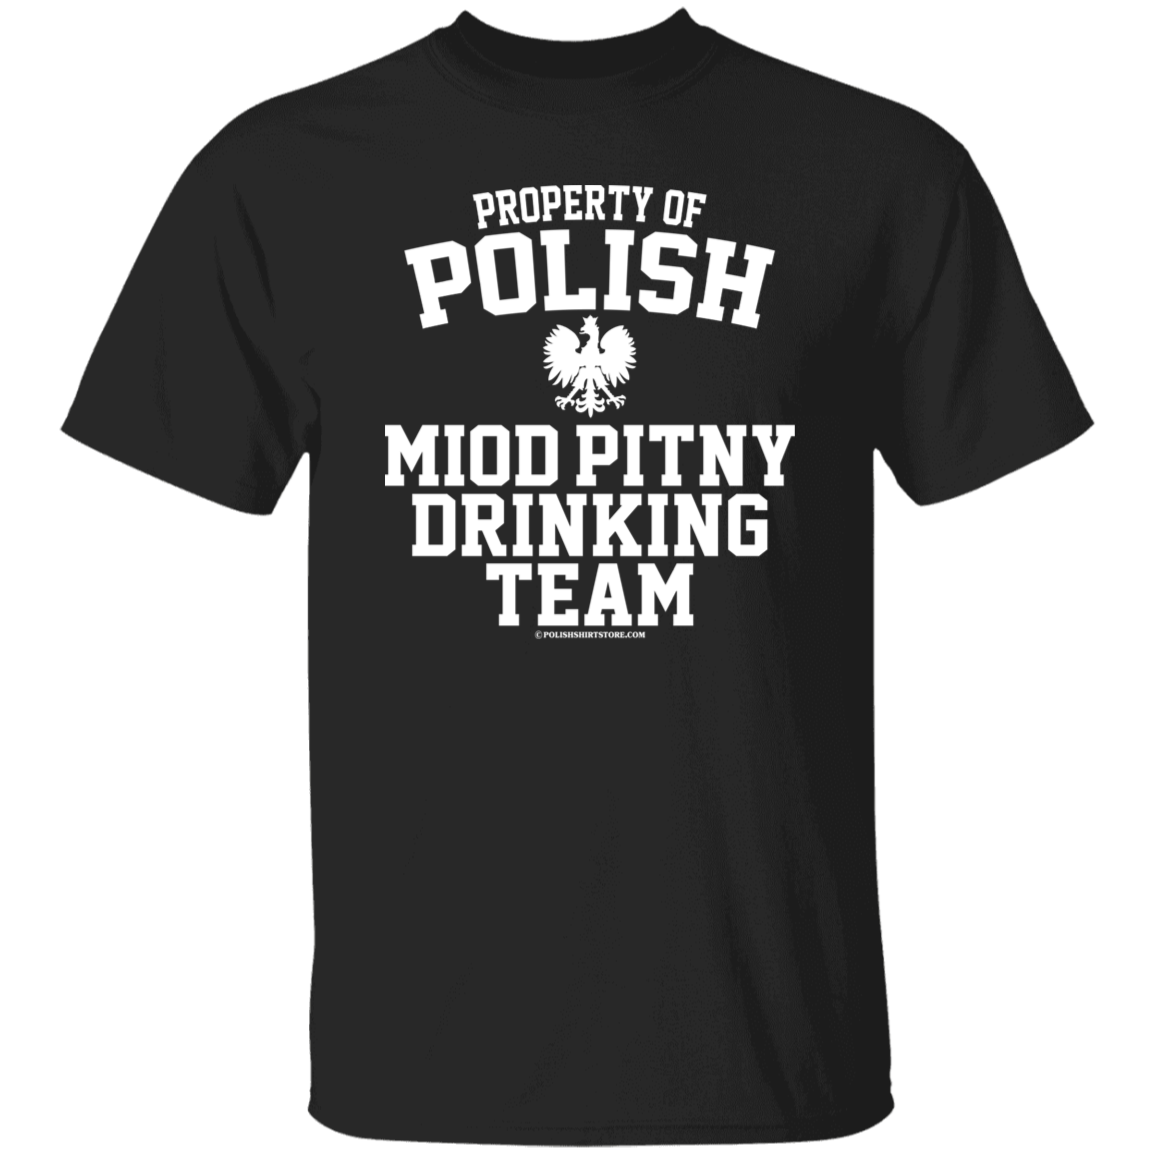 Property of Polish Miod Pitny Drinking Team Apparel CustomCat G500 5.3 oz. T-Shirt Black S